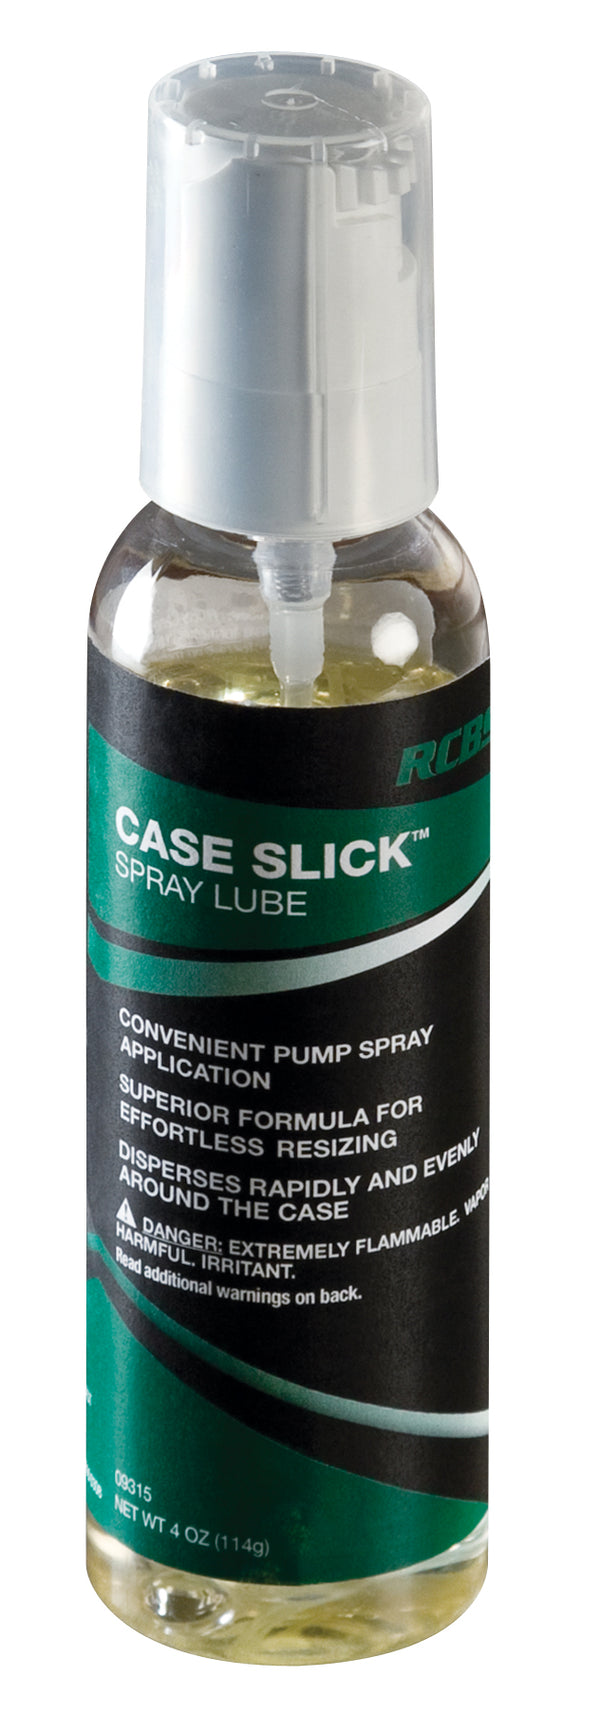 Rcbs Case Slick Spray Lube